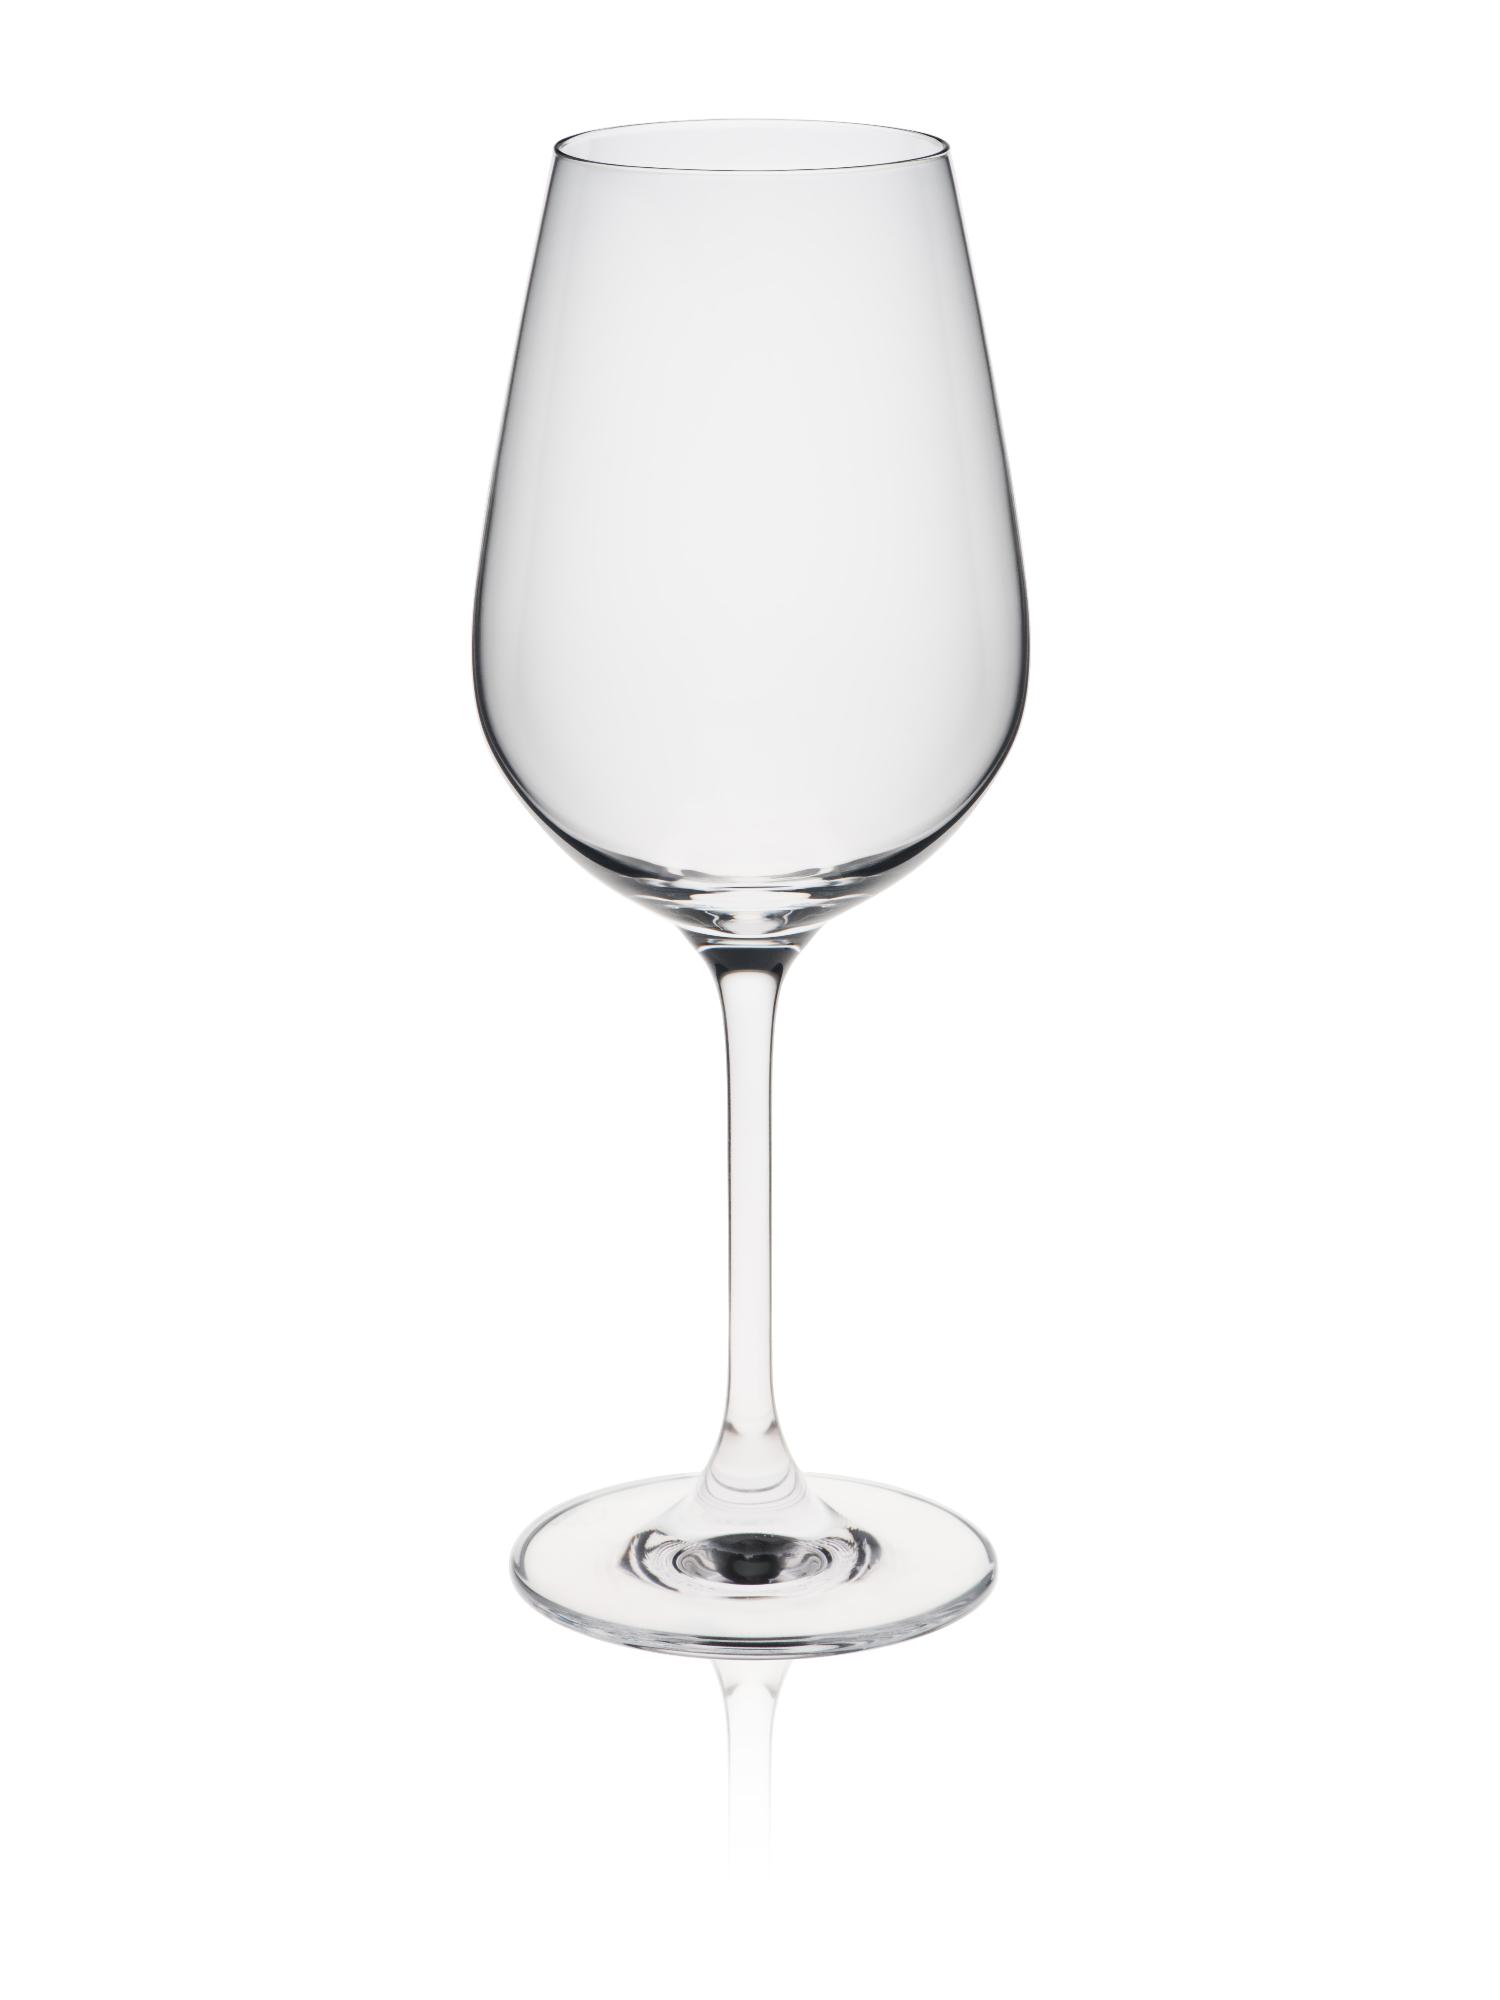 Invitation wine glass, 440ml